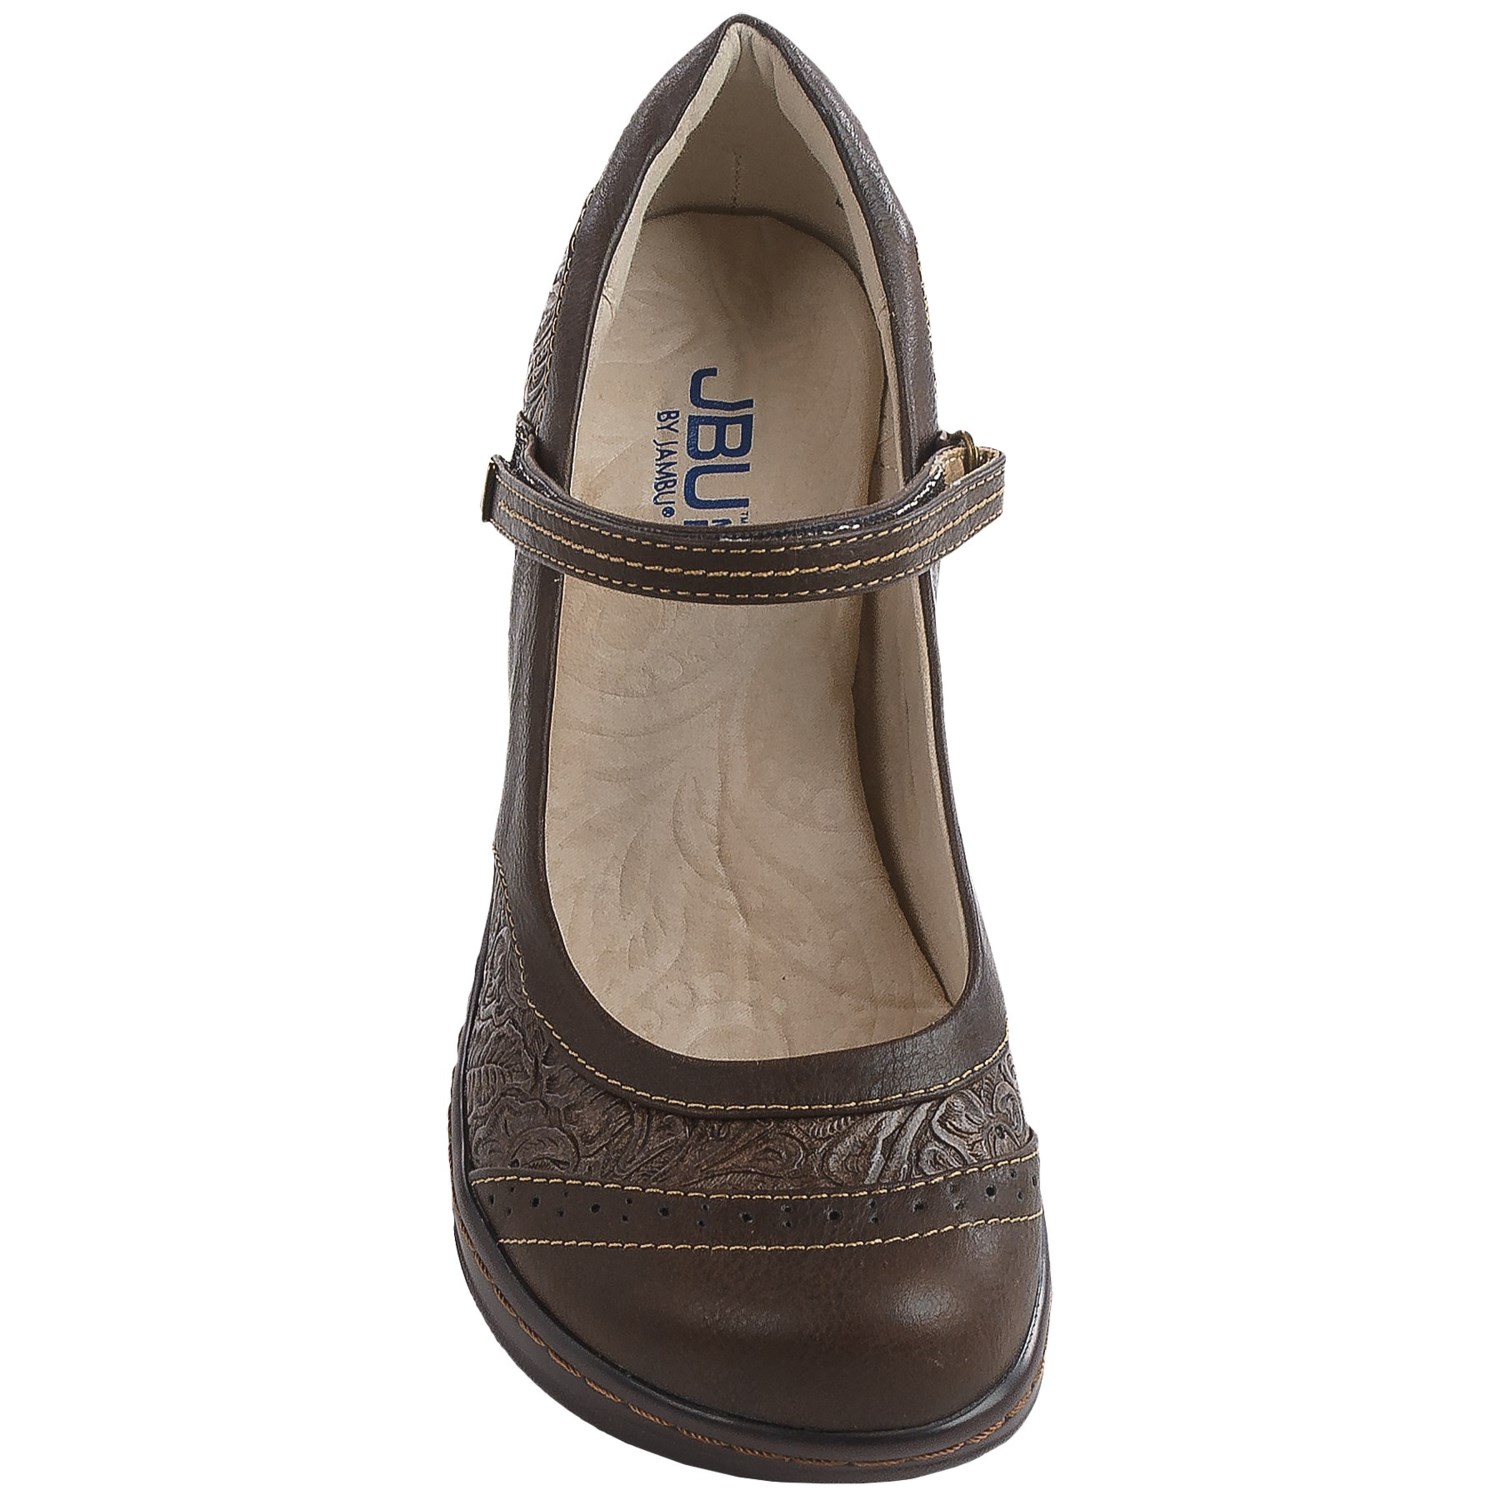 JBU by Jambu Melrose Mary Jane Shoes (For Women) - Save 57%